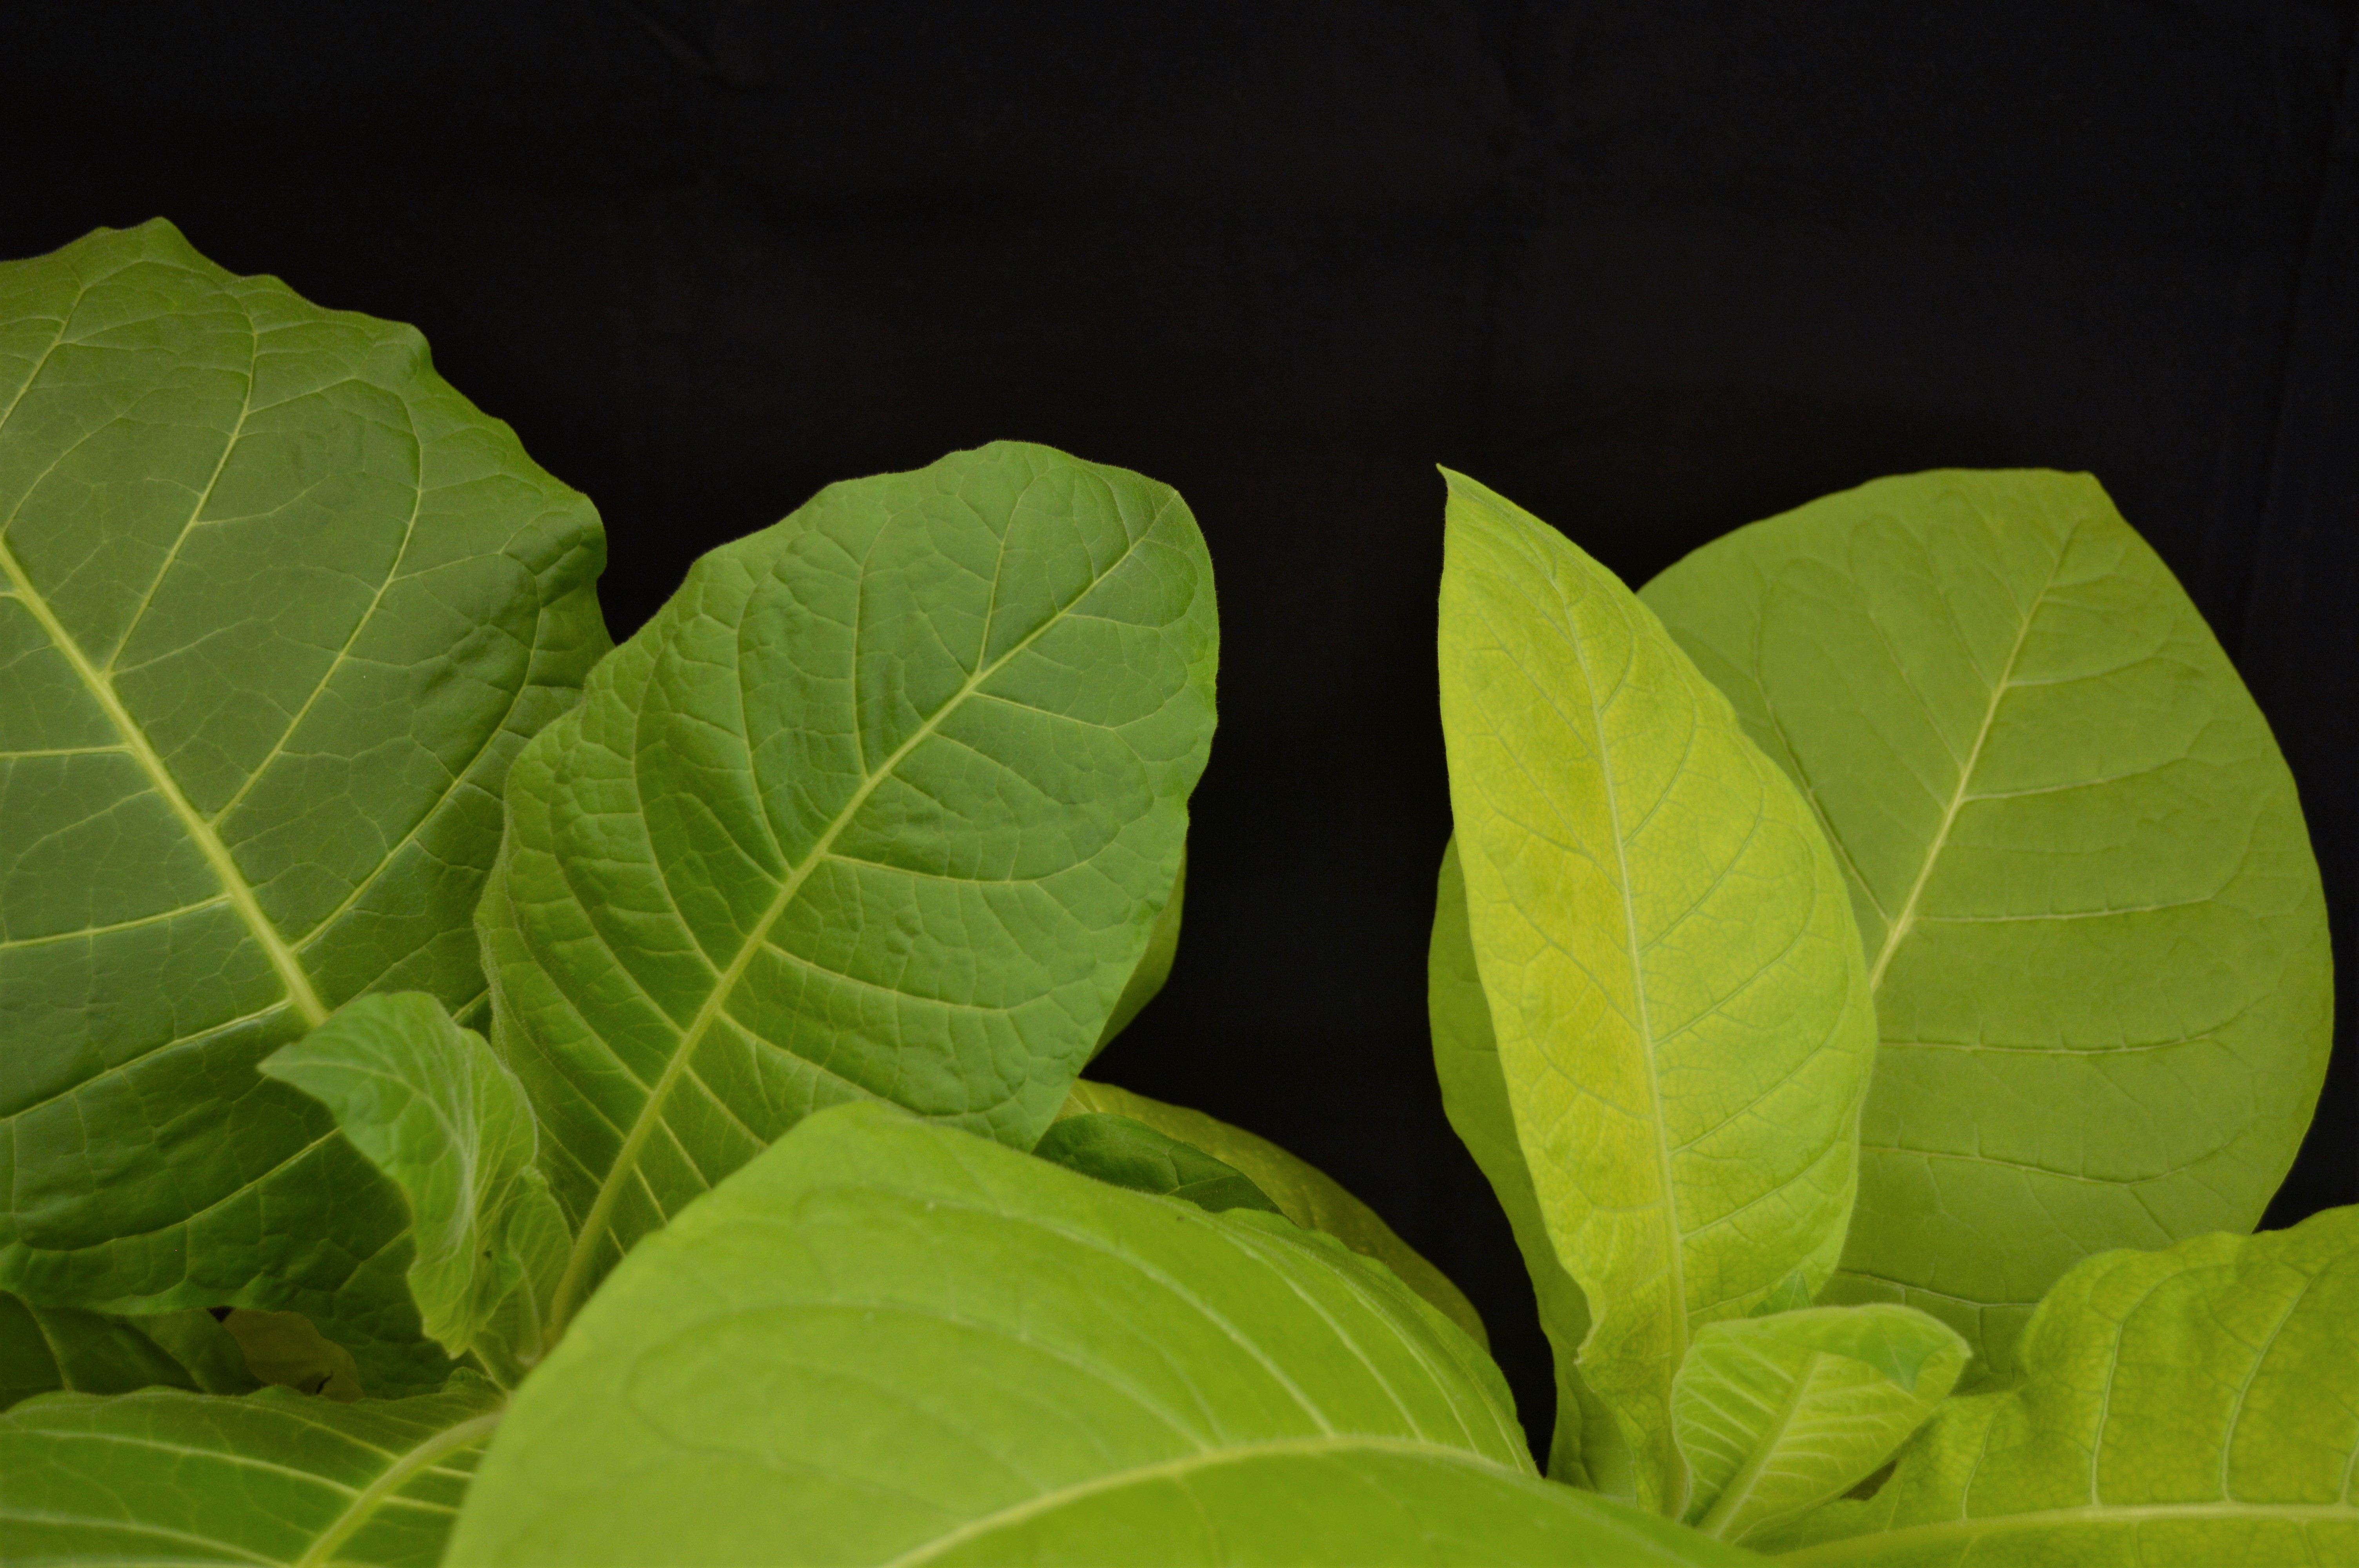 symptoms on tobacco leaves